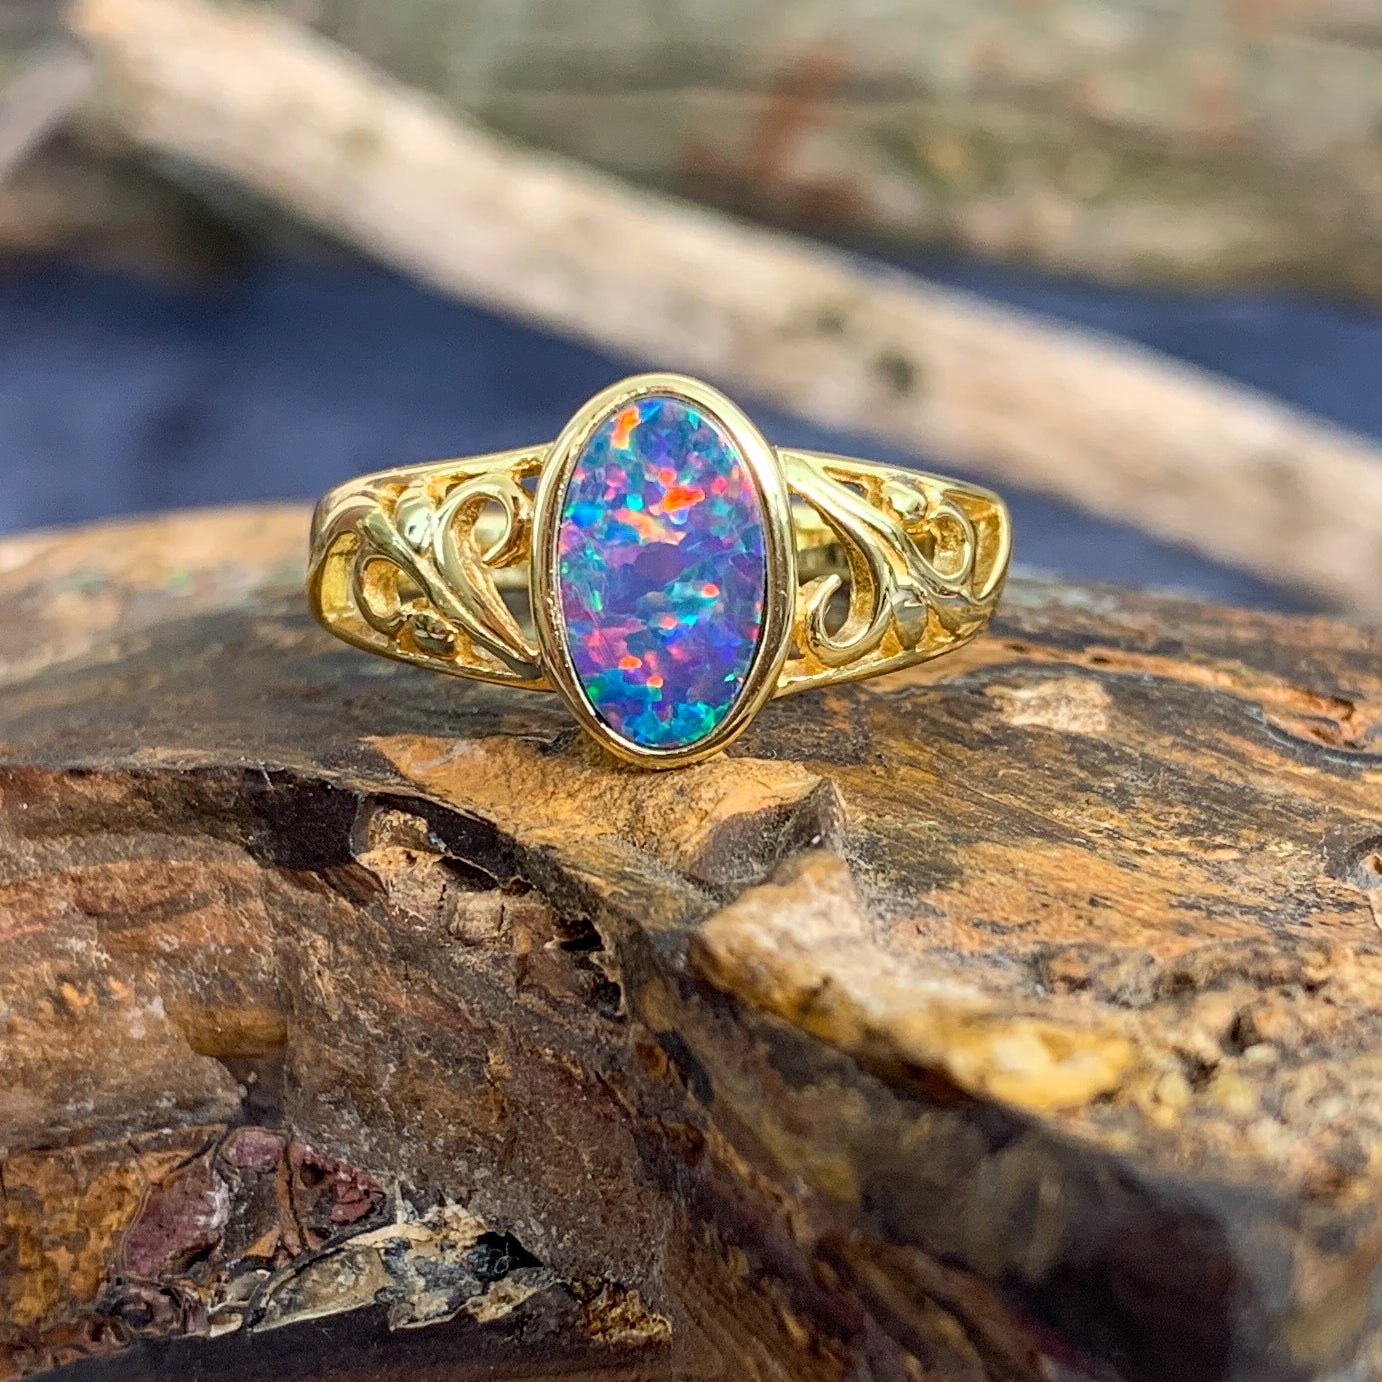 Gold plated silver Opal doublet patterned ring - Masterpiece Jewellery Opal & Gems Sydney Australia | Online Shop